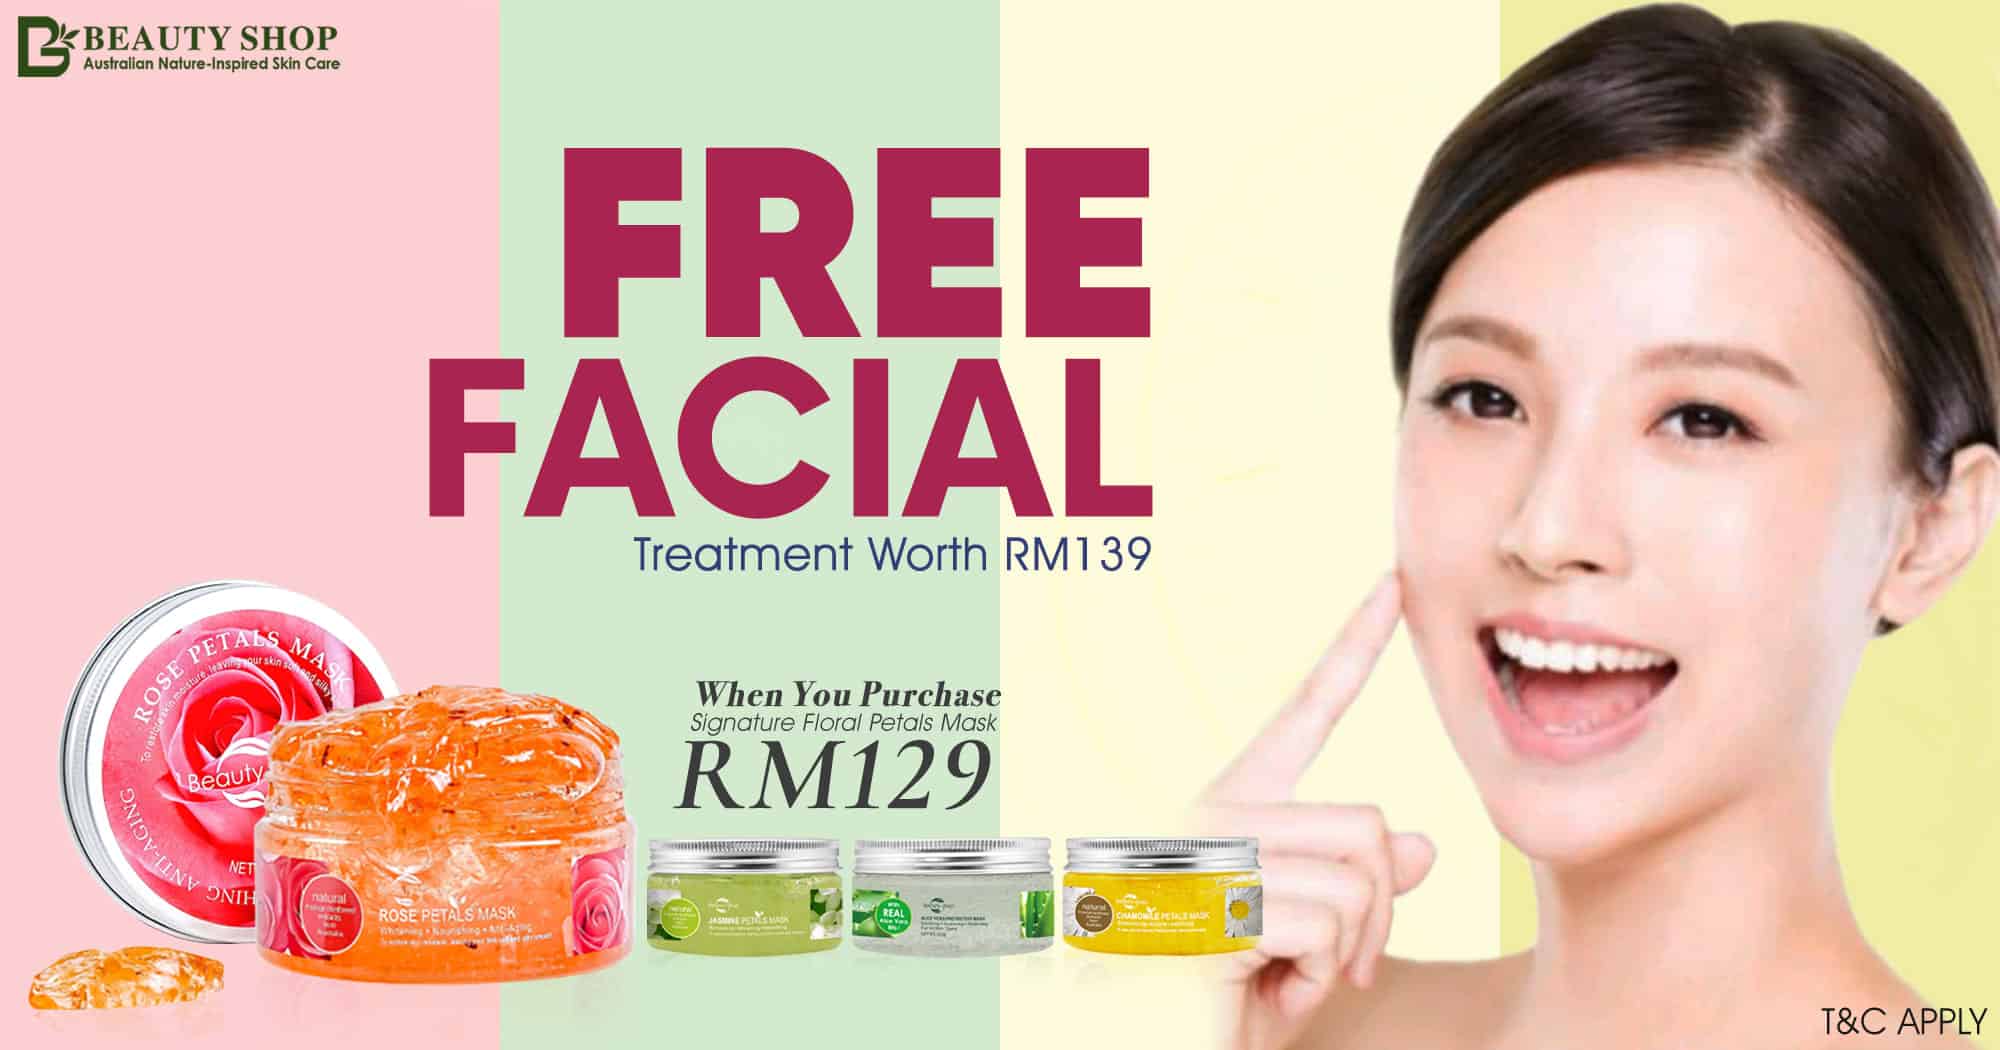 beauty-shop-free-facial-promo-01